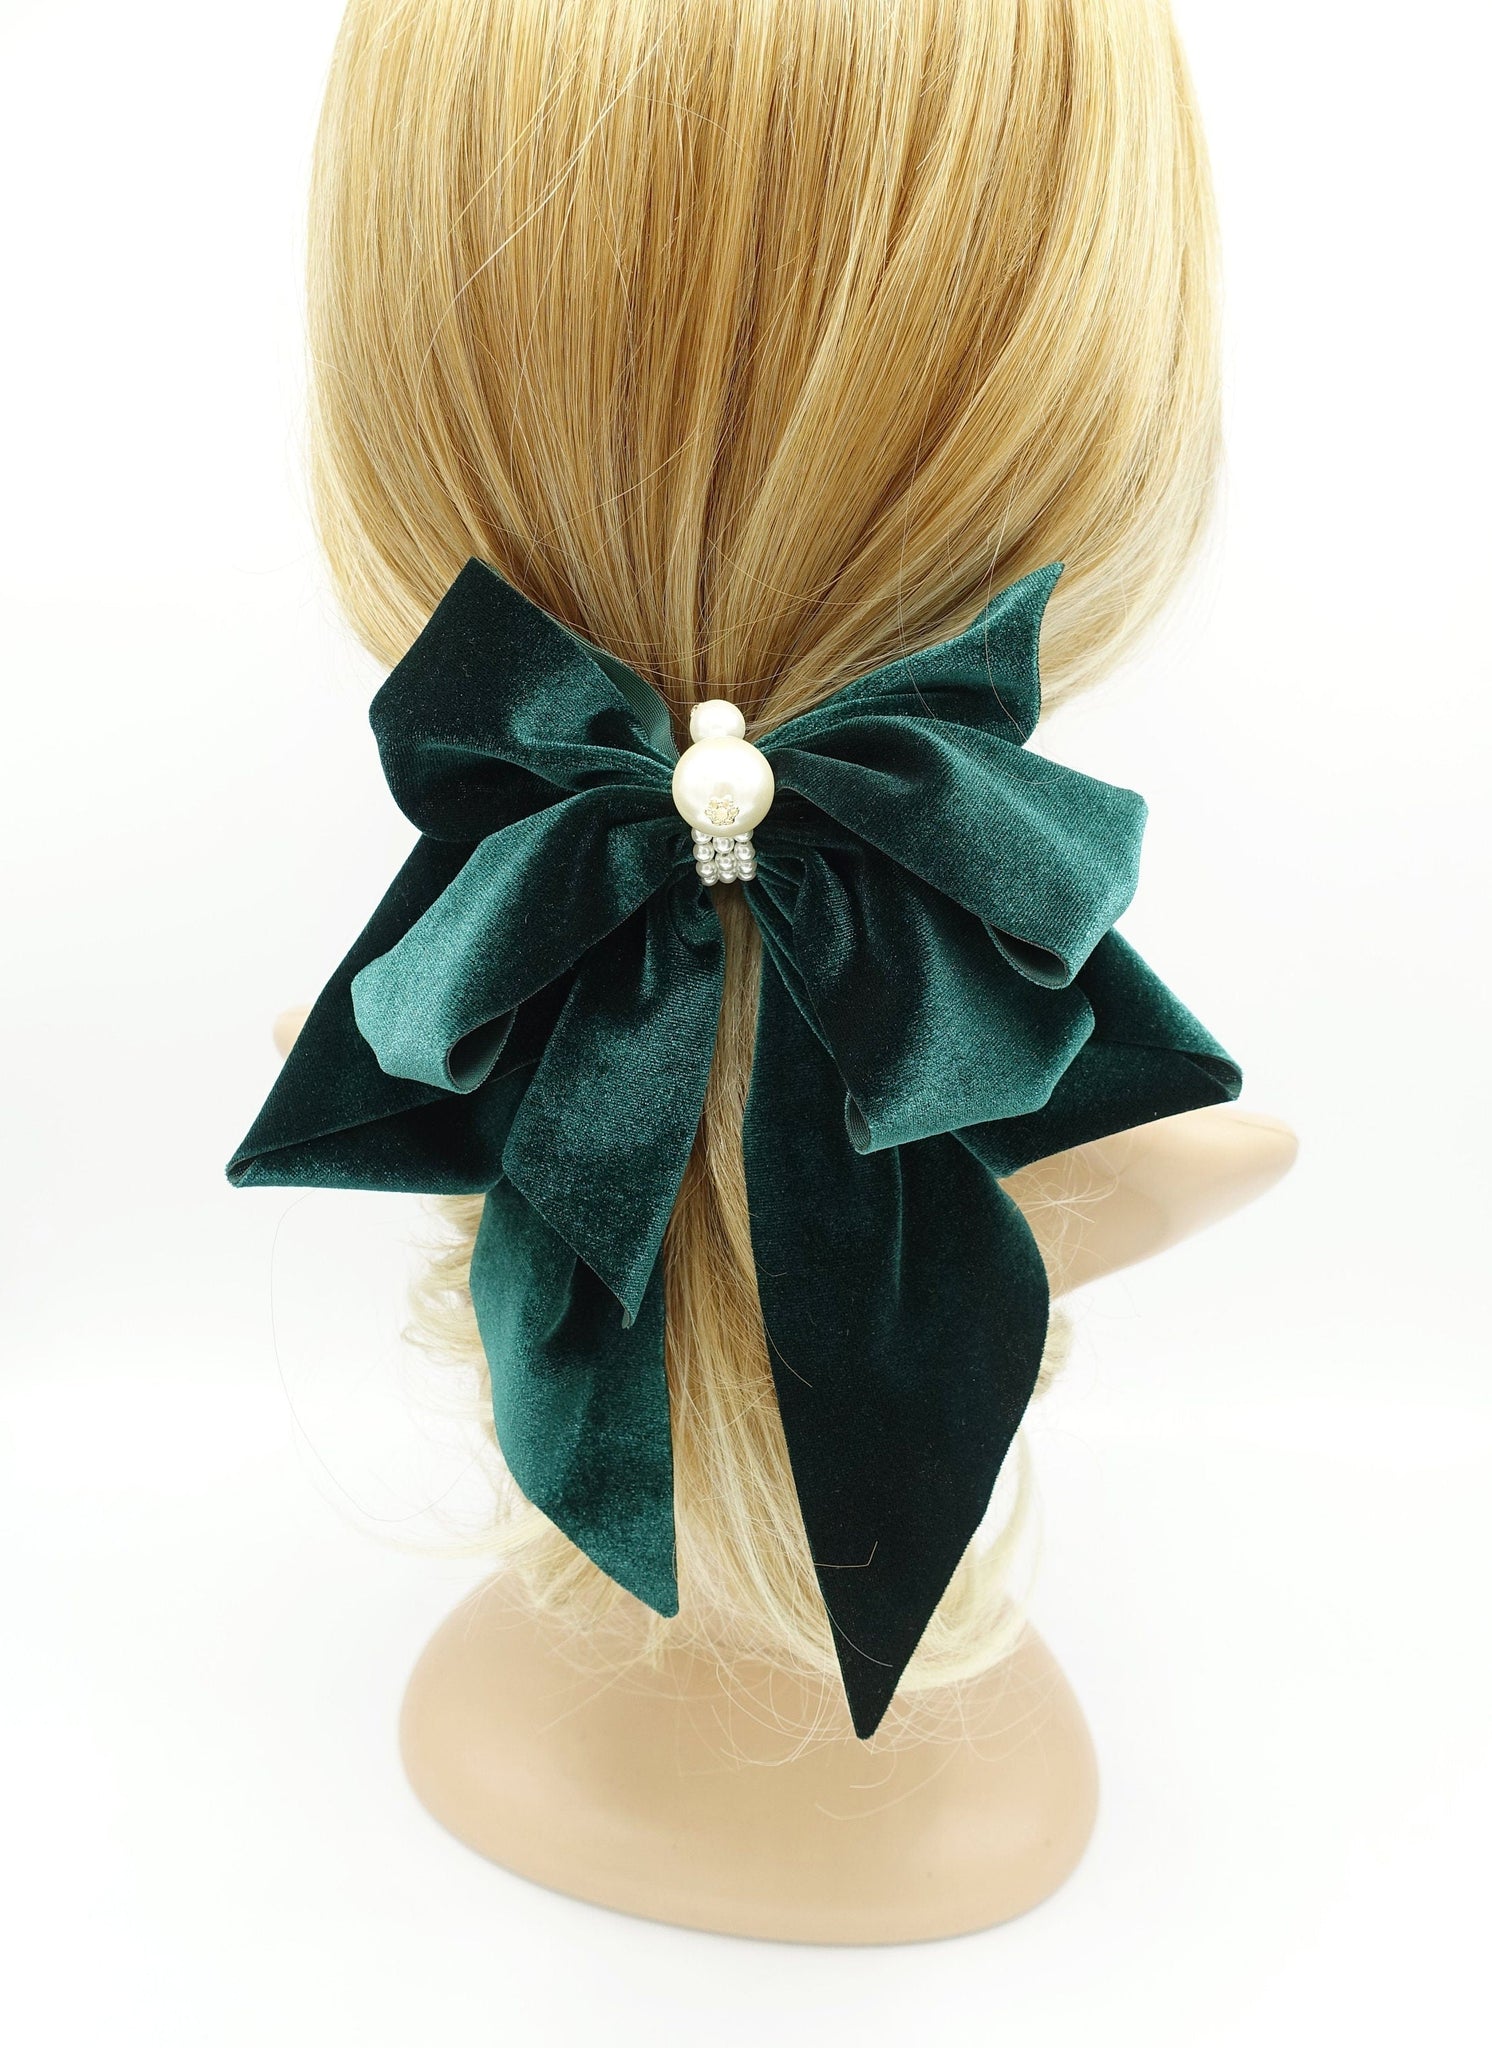 veryshine.com Barrette (Bow) Green velvet hair bow pearl embellished hair accessory for women